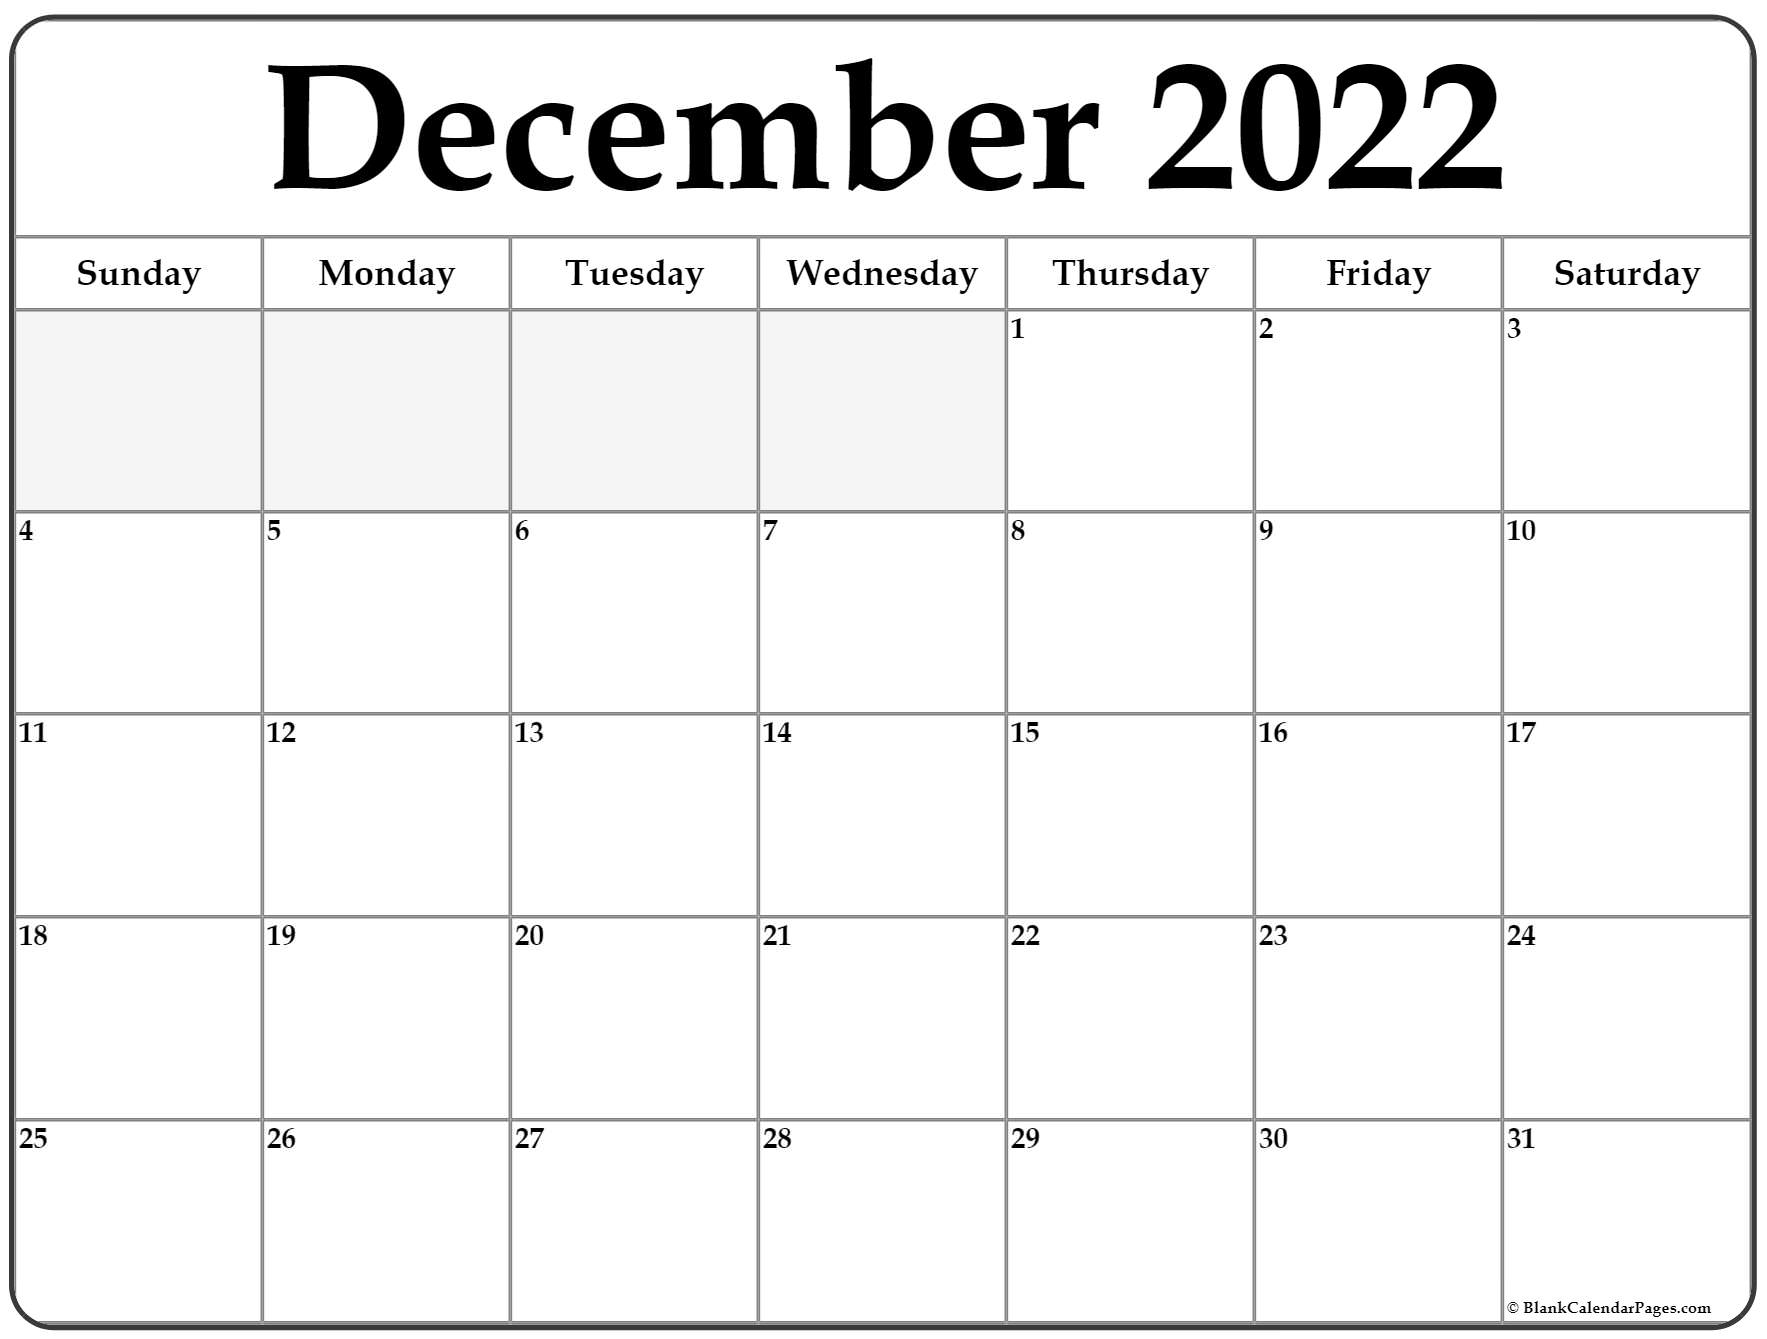 ma sjc december 2022 calendar february 2022 calendar